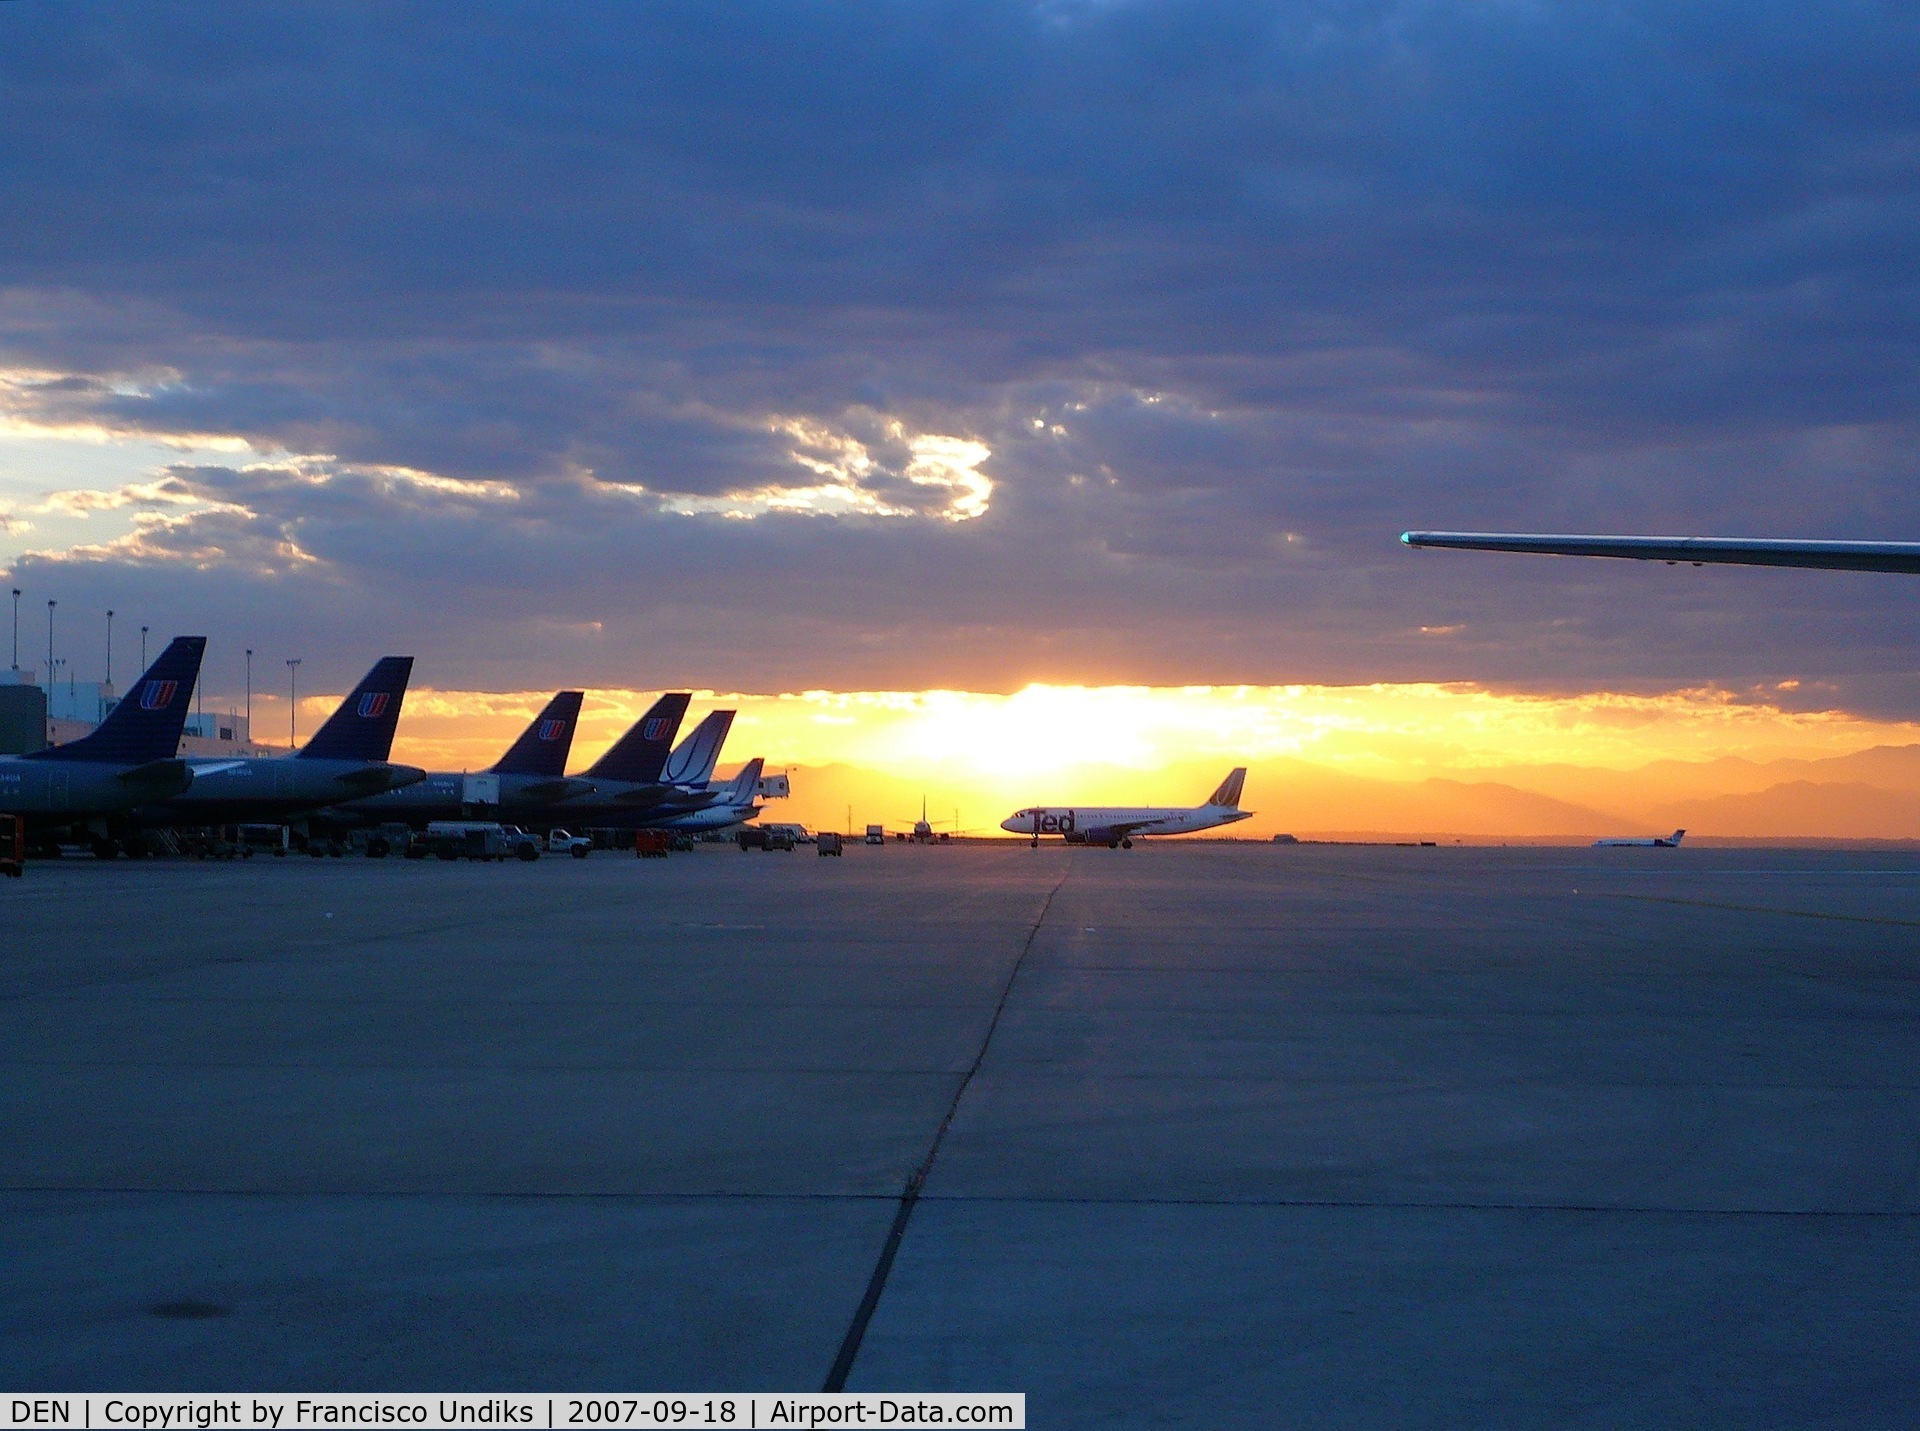 Denver International Airport (DEN) - A Colorado sunset.